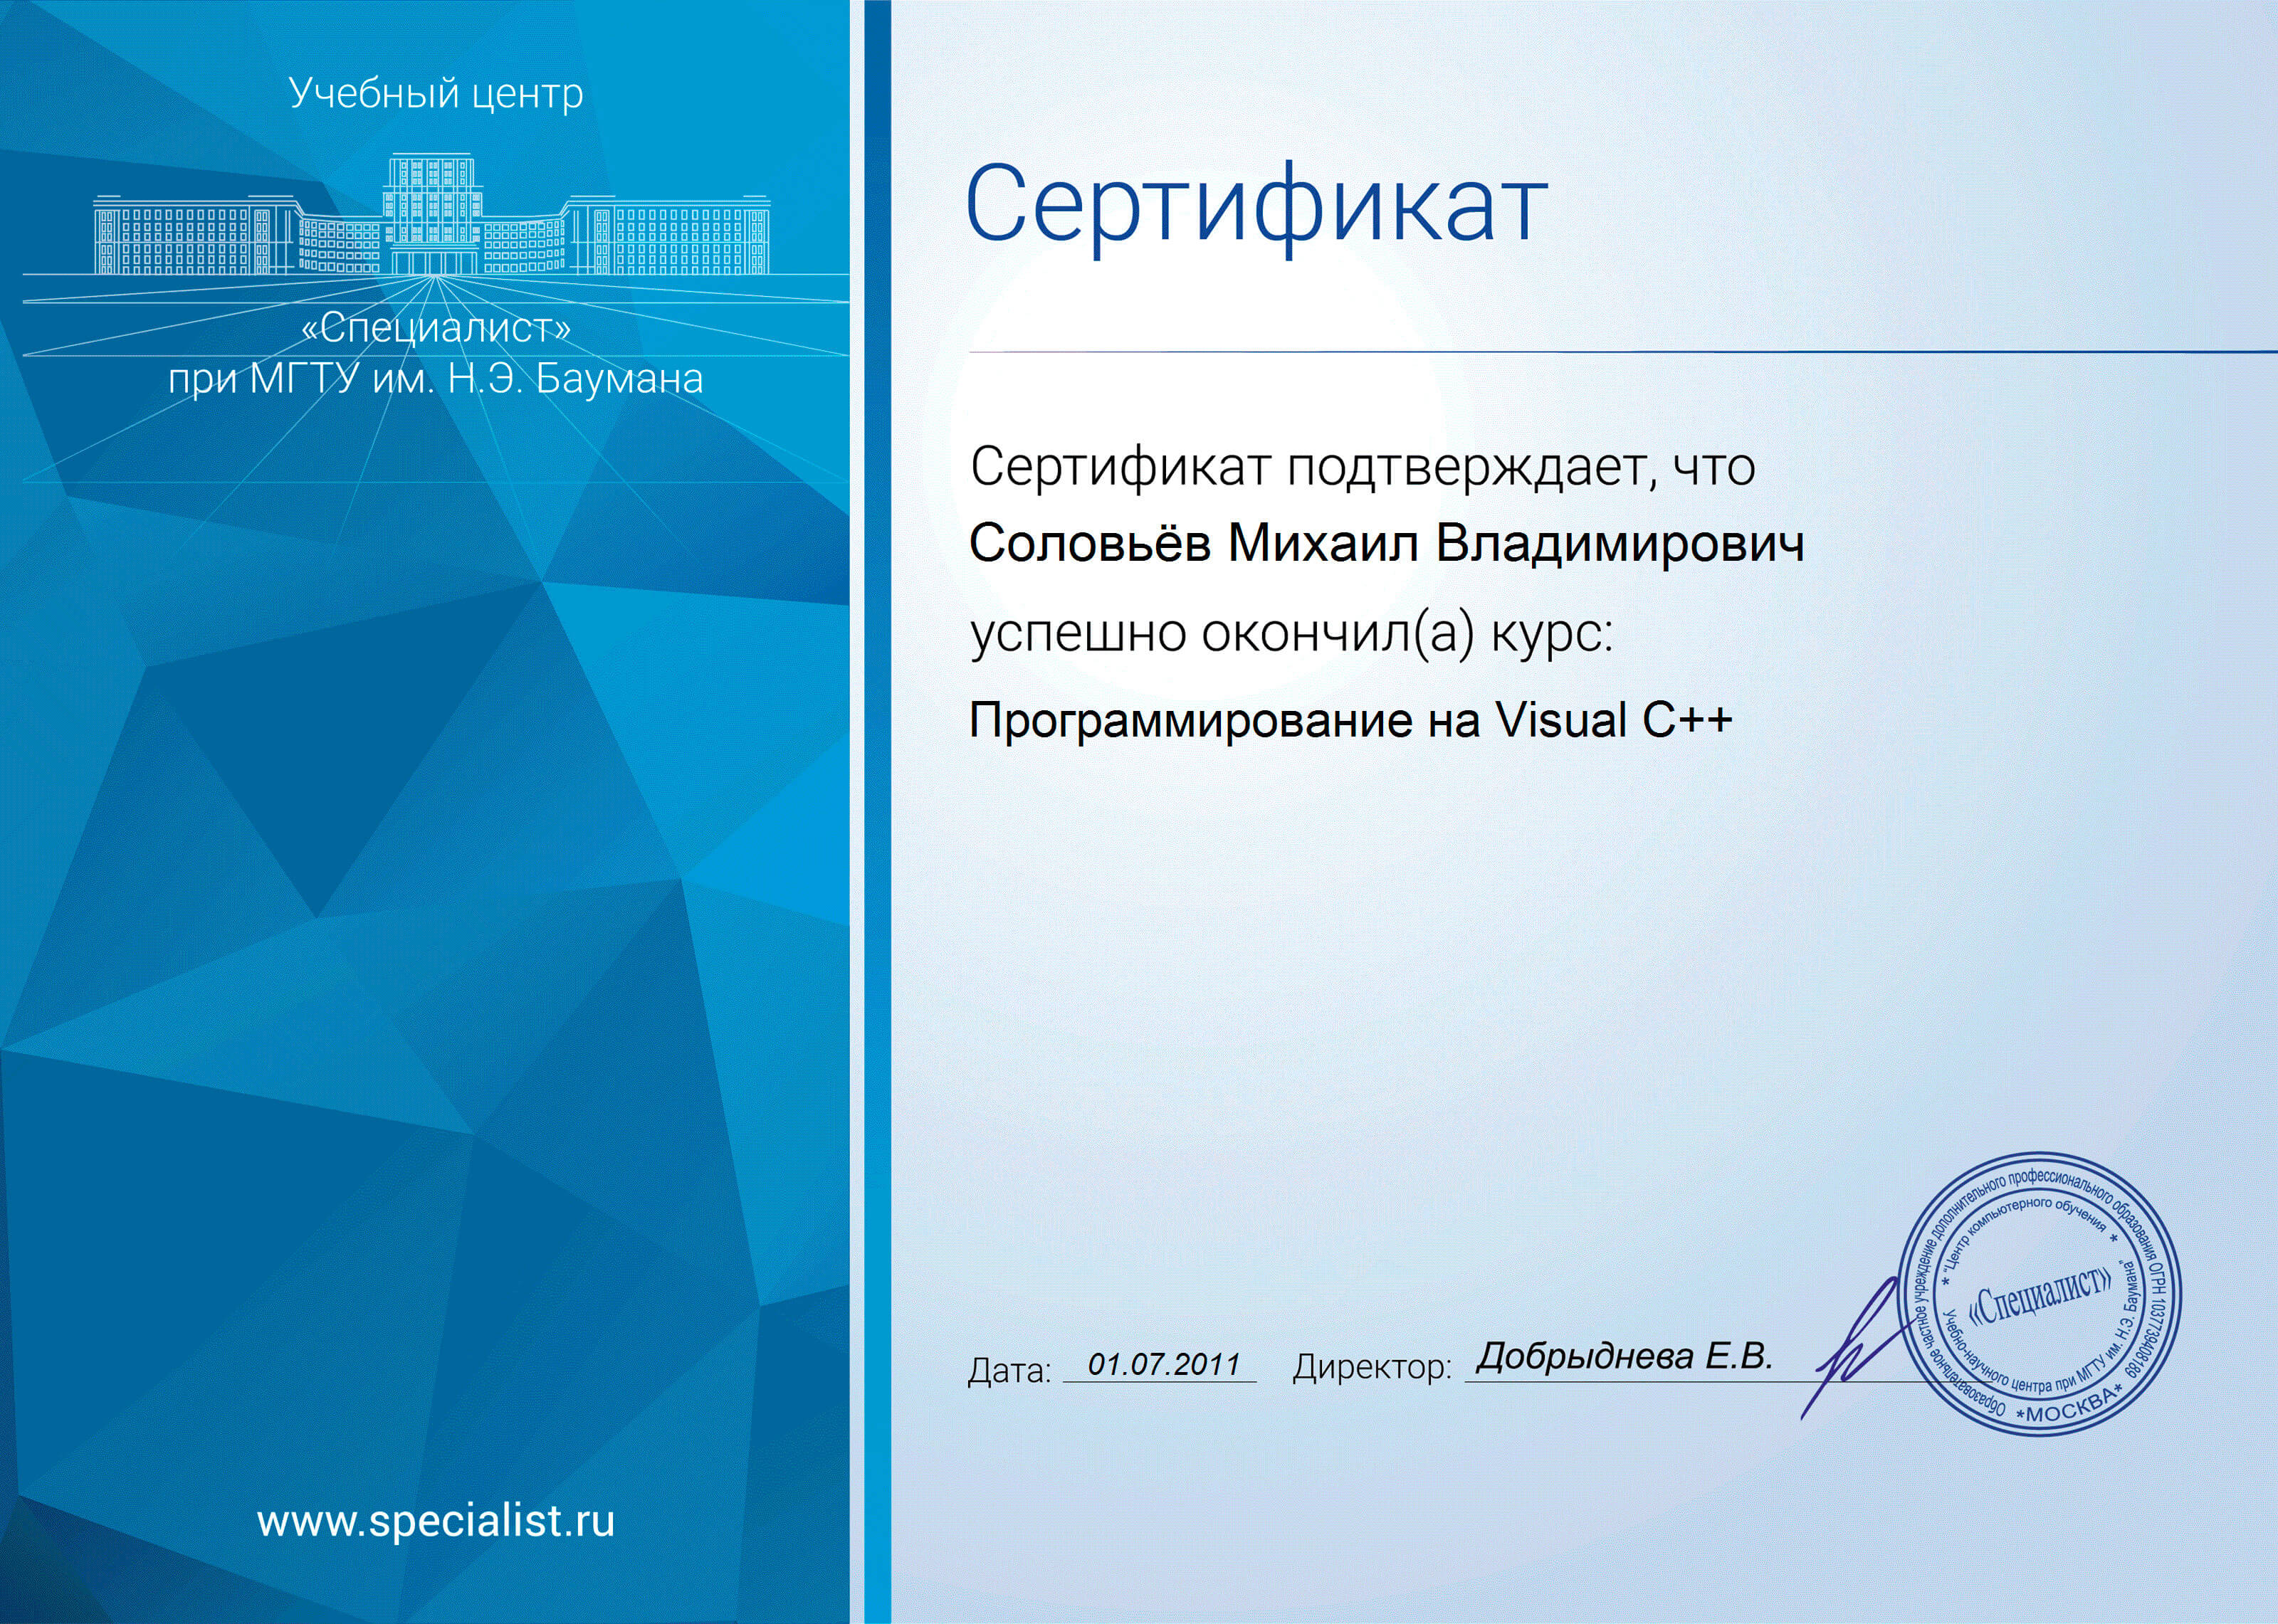 Сертификат “Программироание на С++”